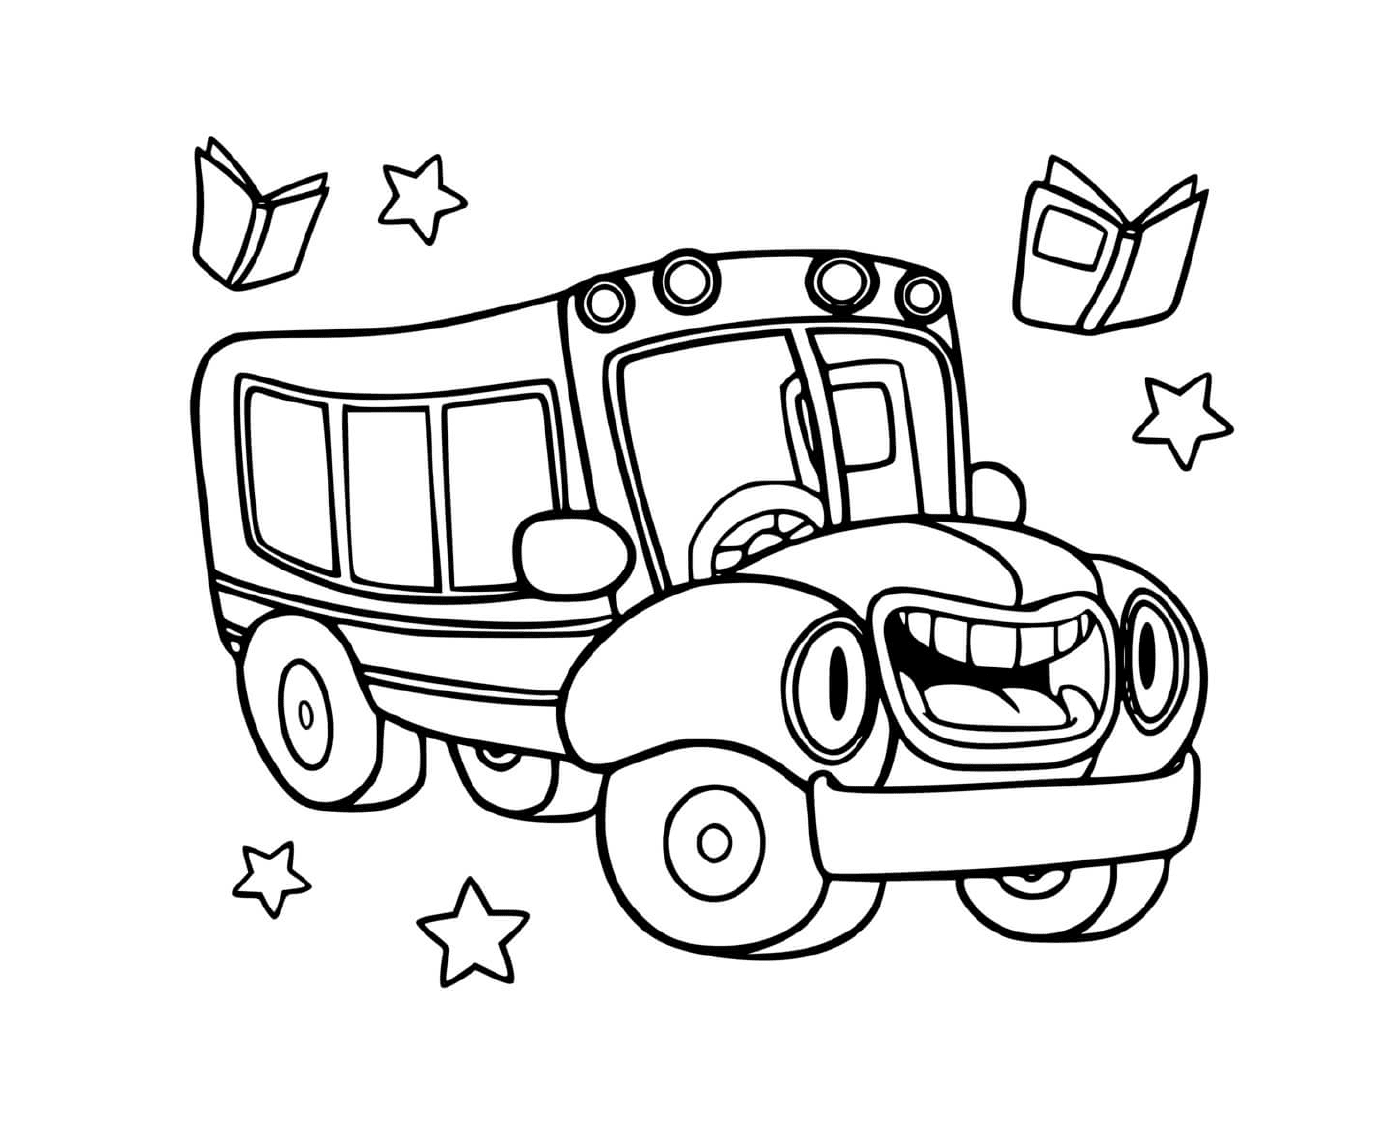  A school bus for schoolchildren 